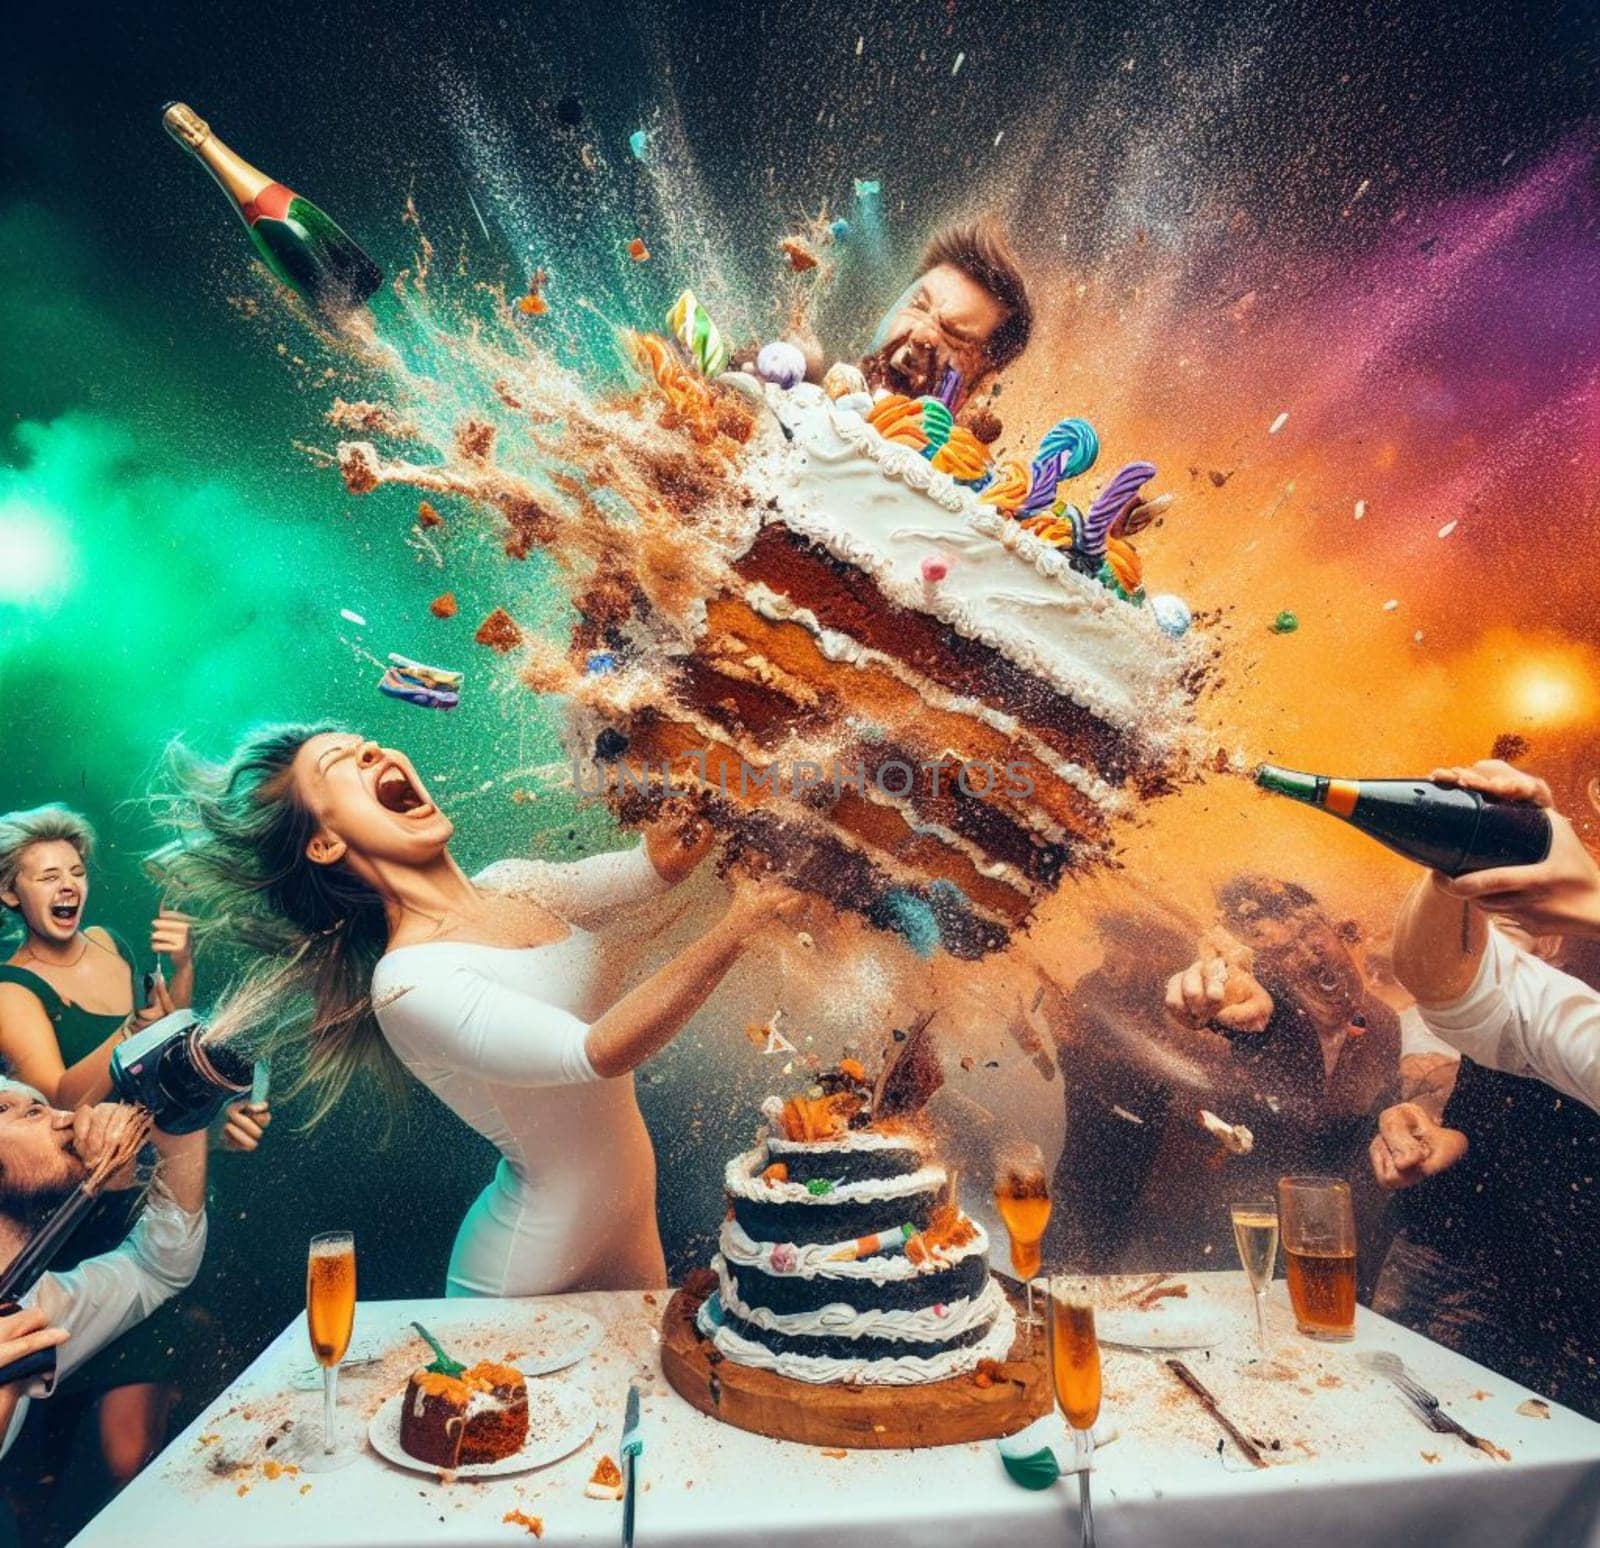 group elegant people celebrate toxic gala birthday at club throw cake splash wine wild party dance shout laugh art generated ai